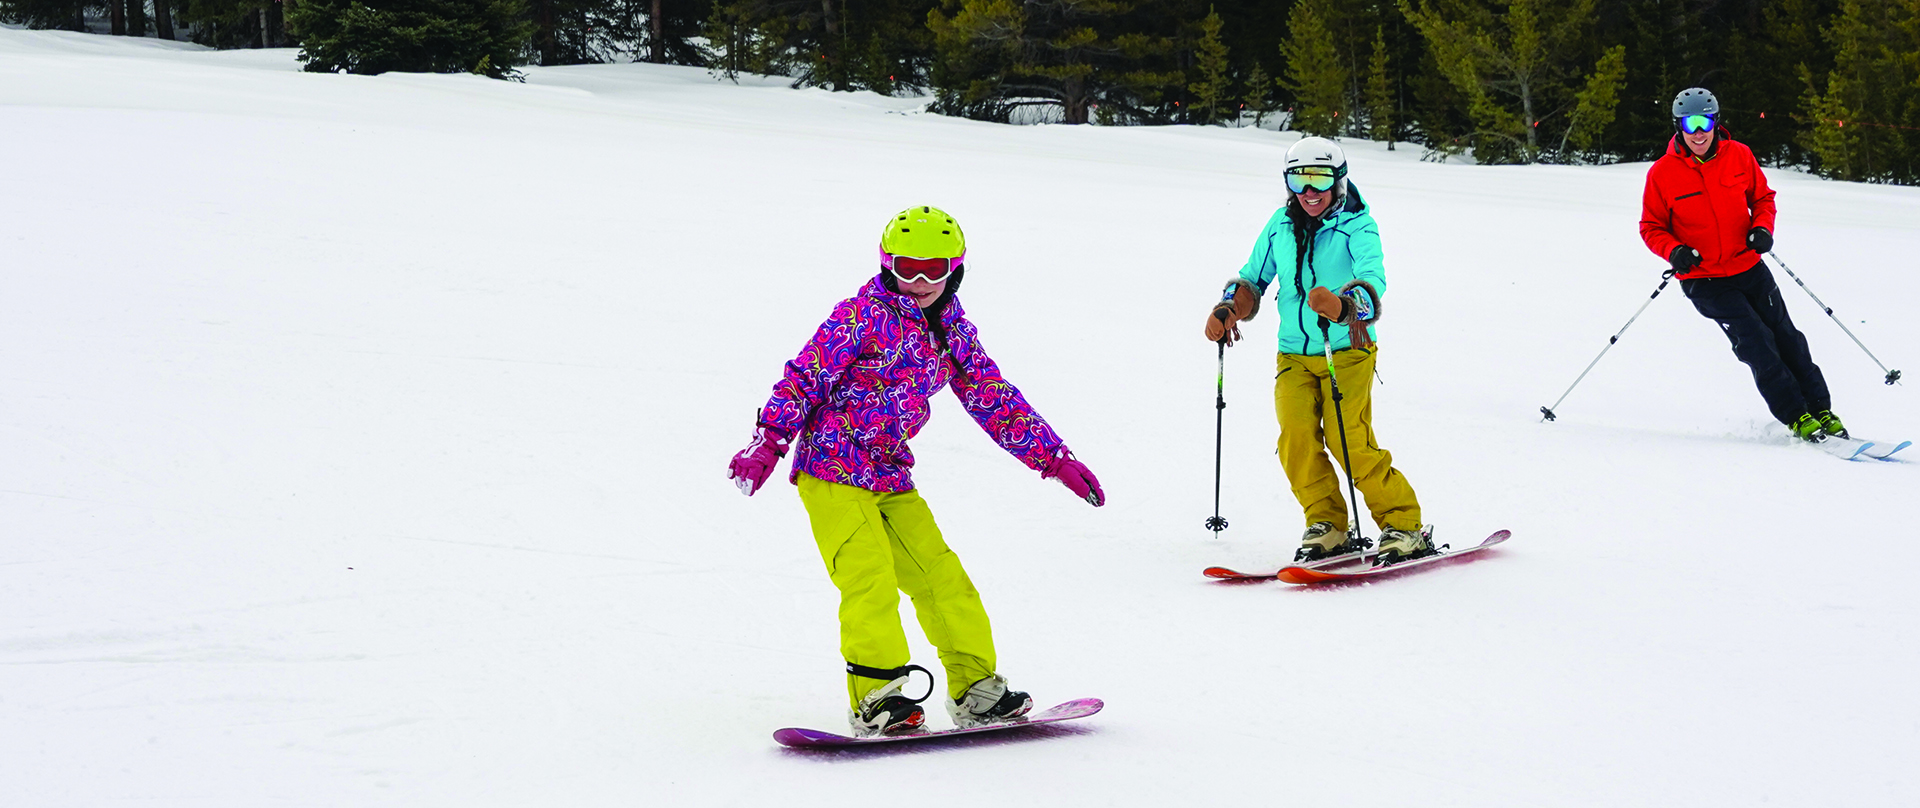 3 people skiing/snowboarding